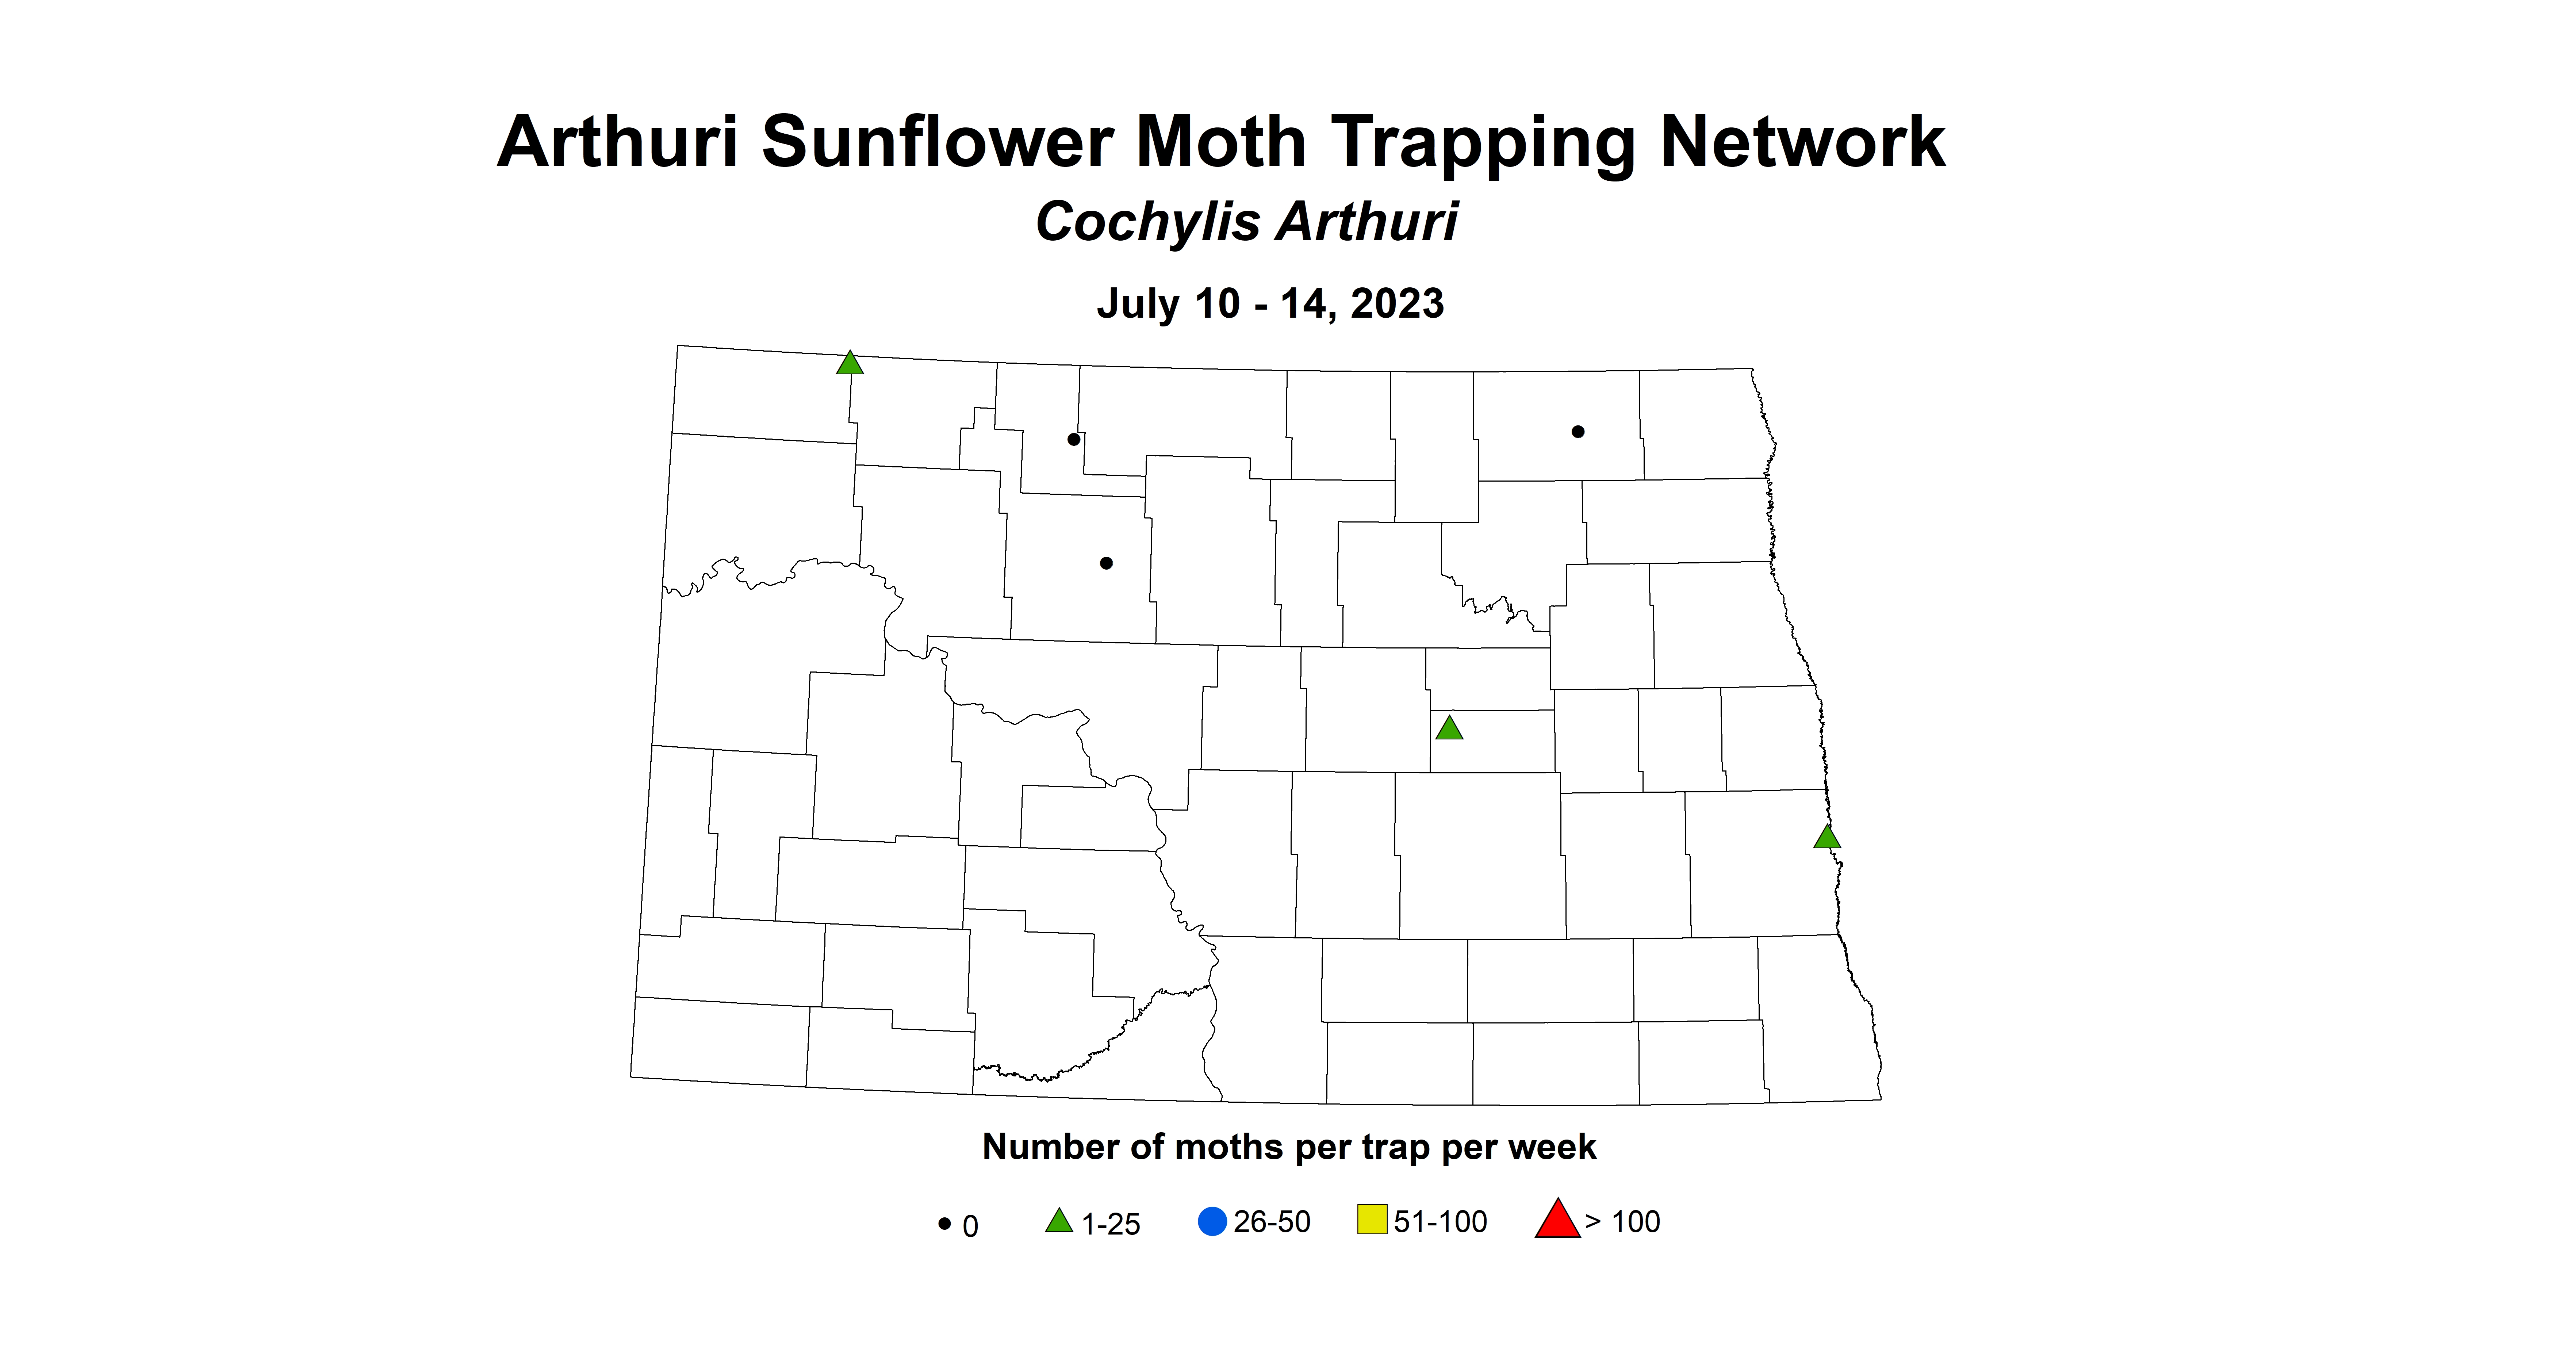 sunflower insect trap arthuri sunflower moth July 10-14 2023